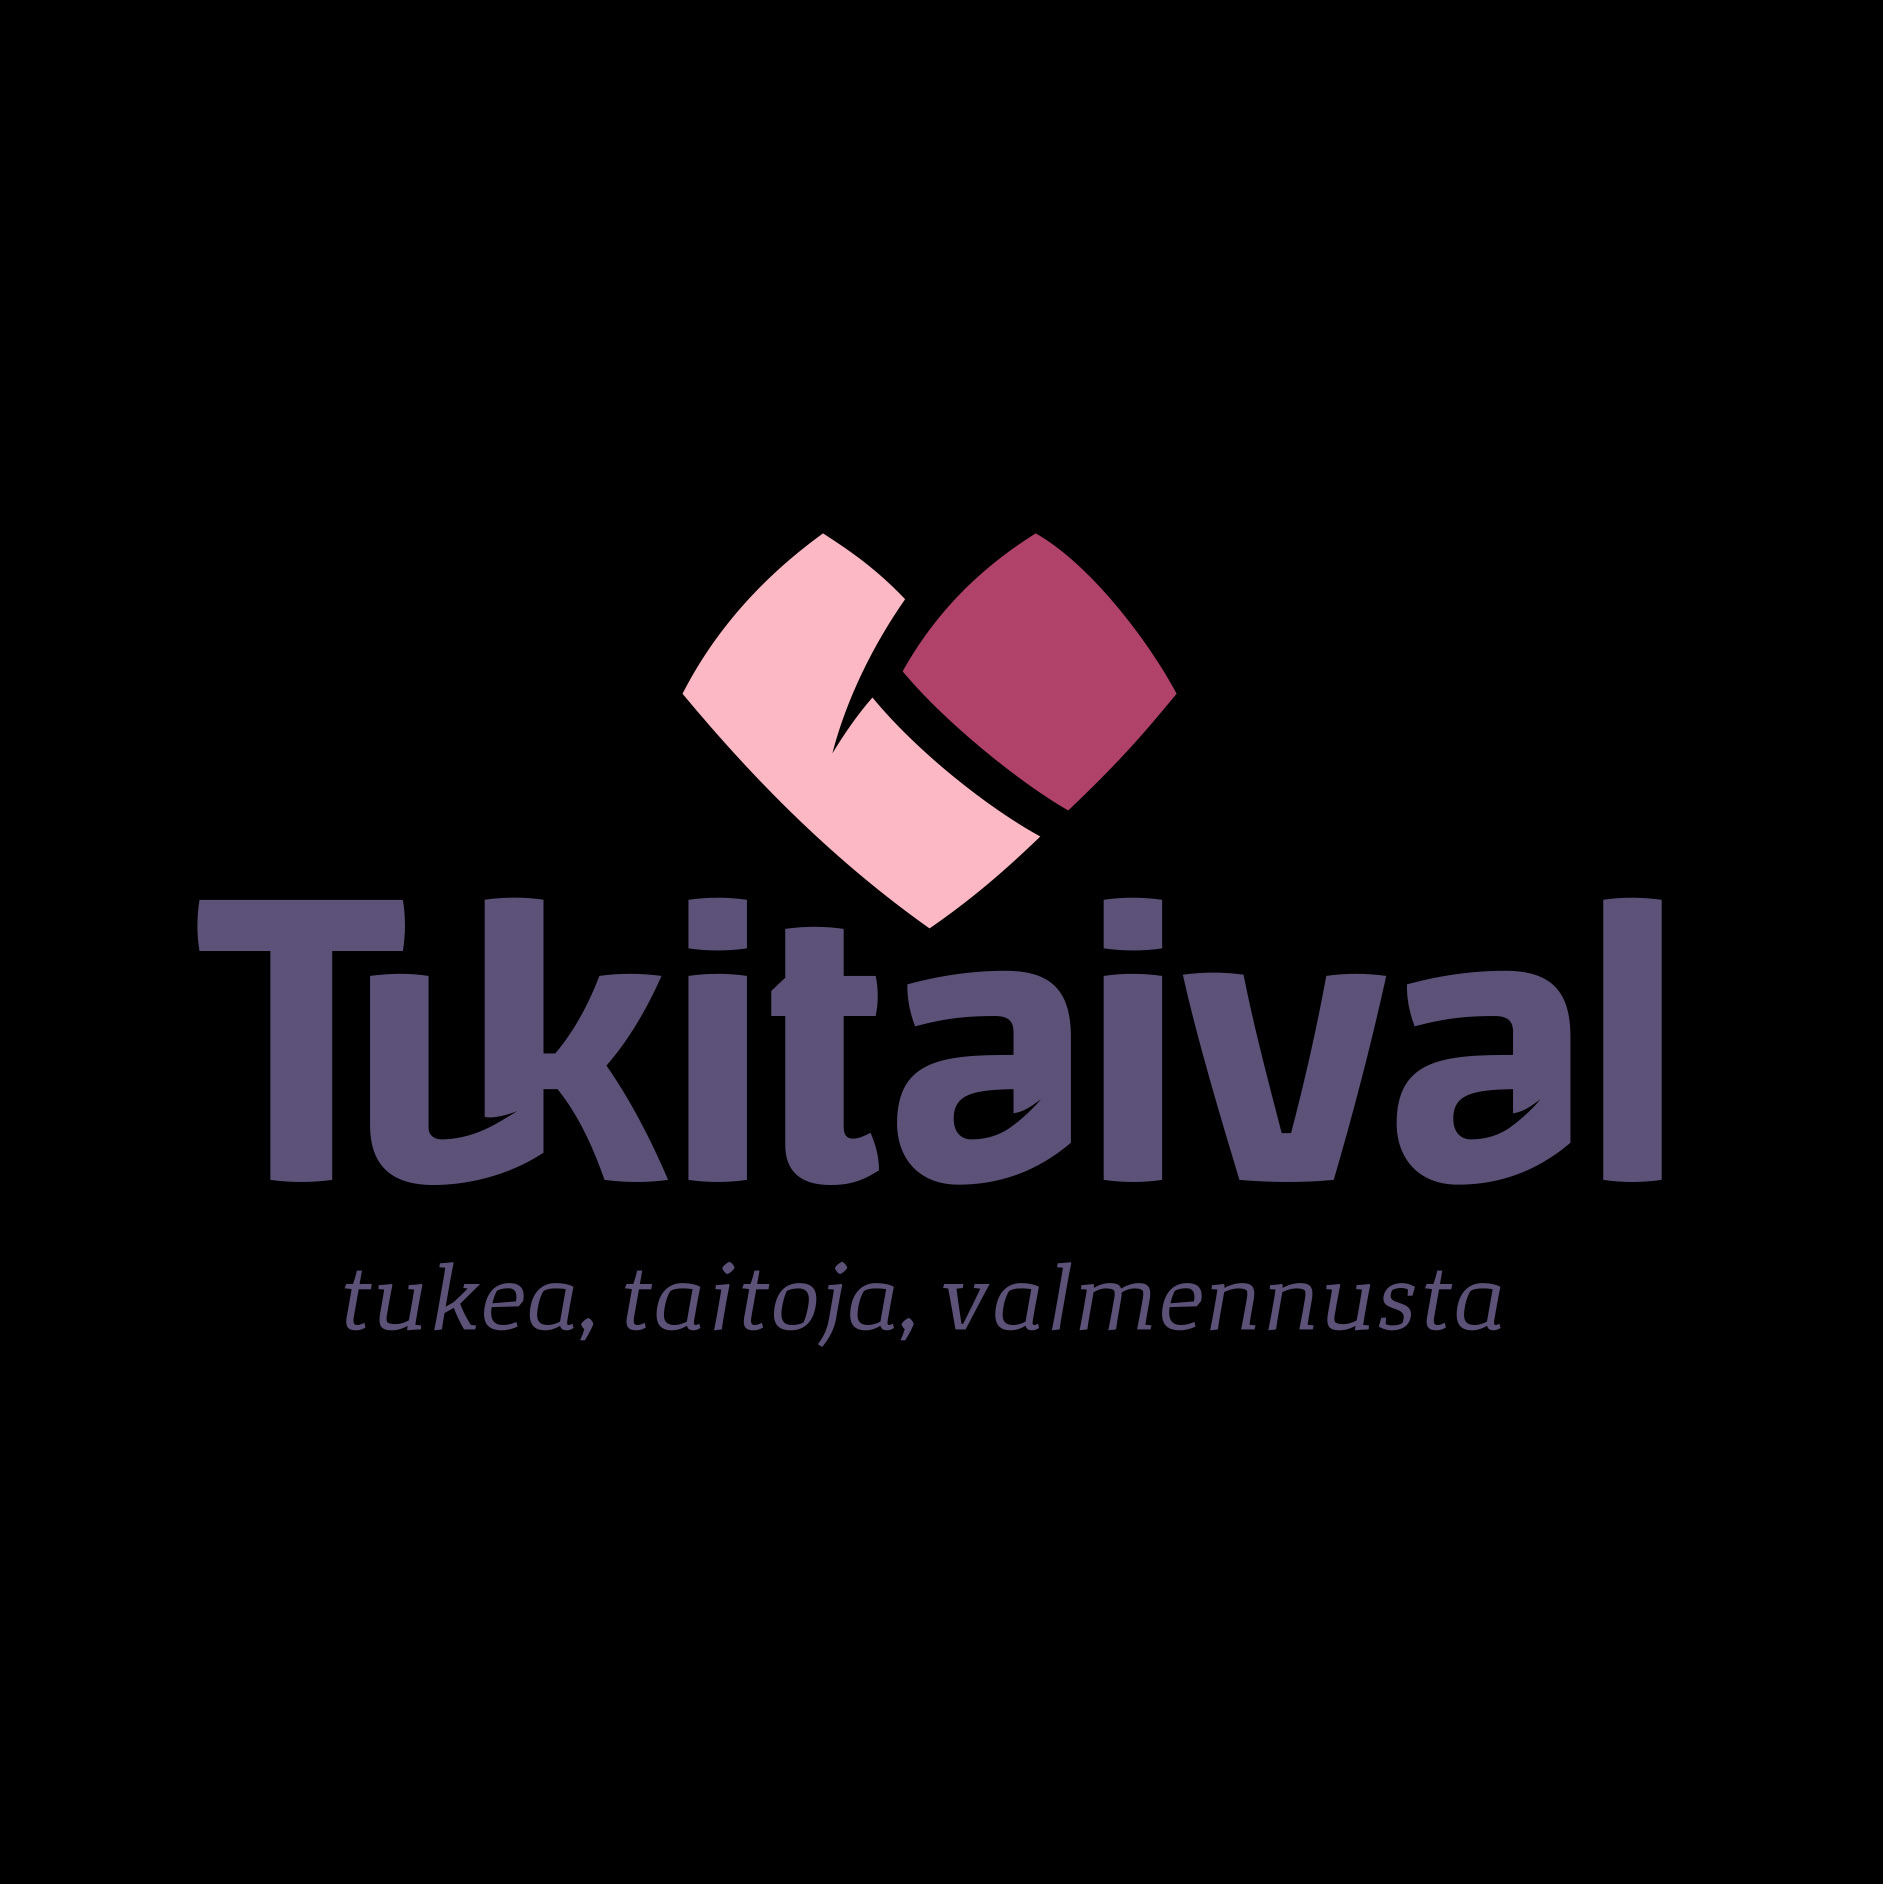 Logo, Tukitaival, made by Therwiz Design